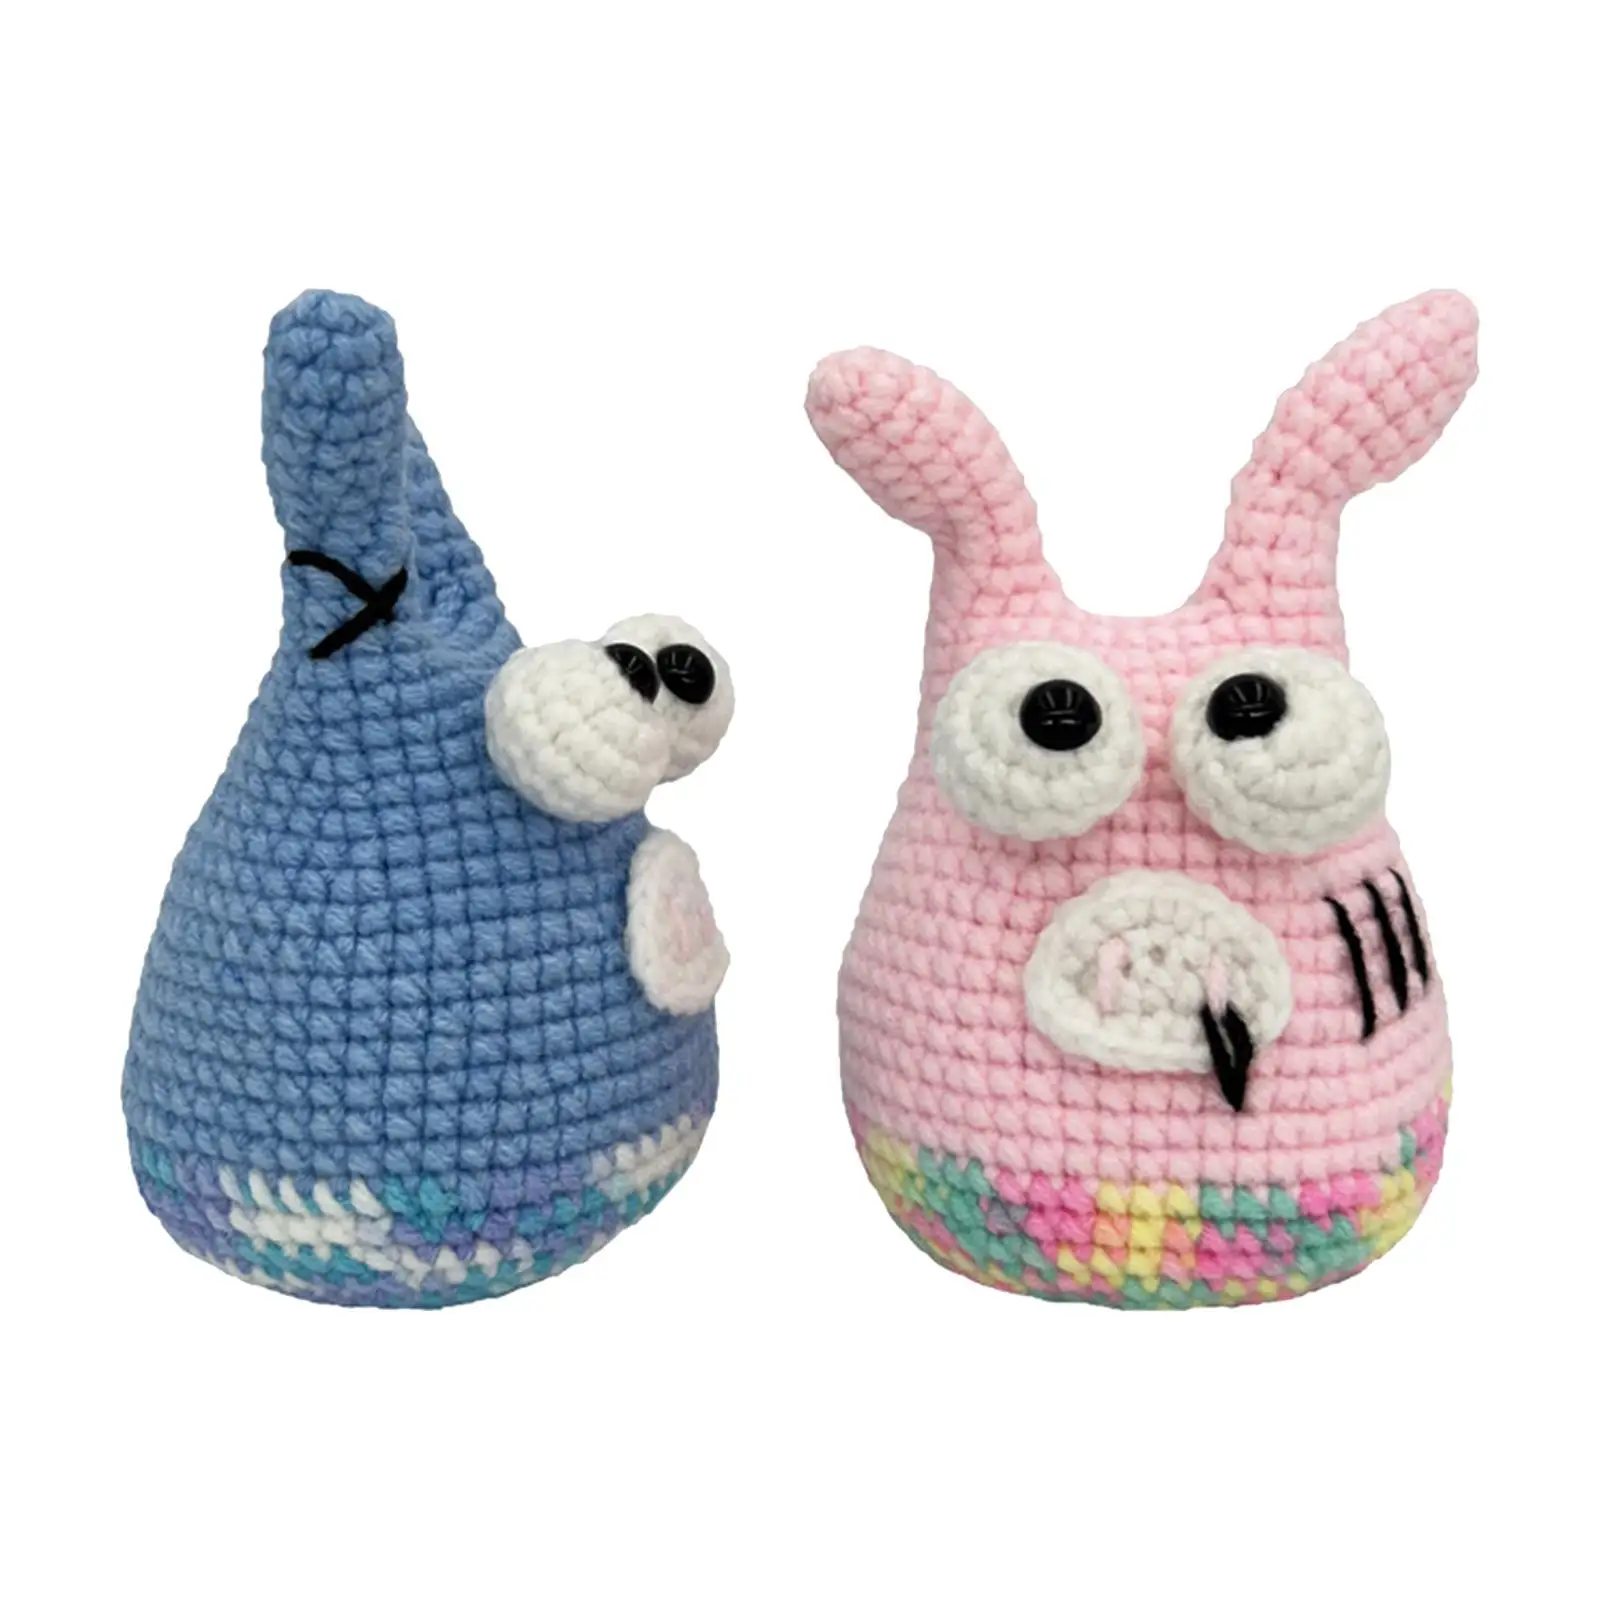 Crochet Animal Kit DIY Hand Knitting Toy Crochet Craft Set with Crochet Accessories Pig Doll for Knitting Lover Birthday Gift